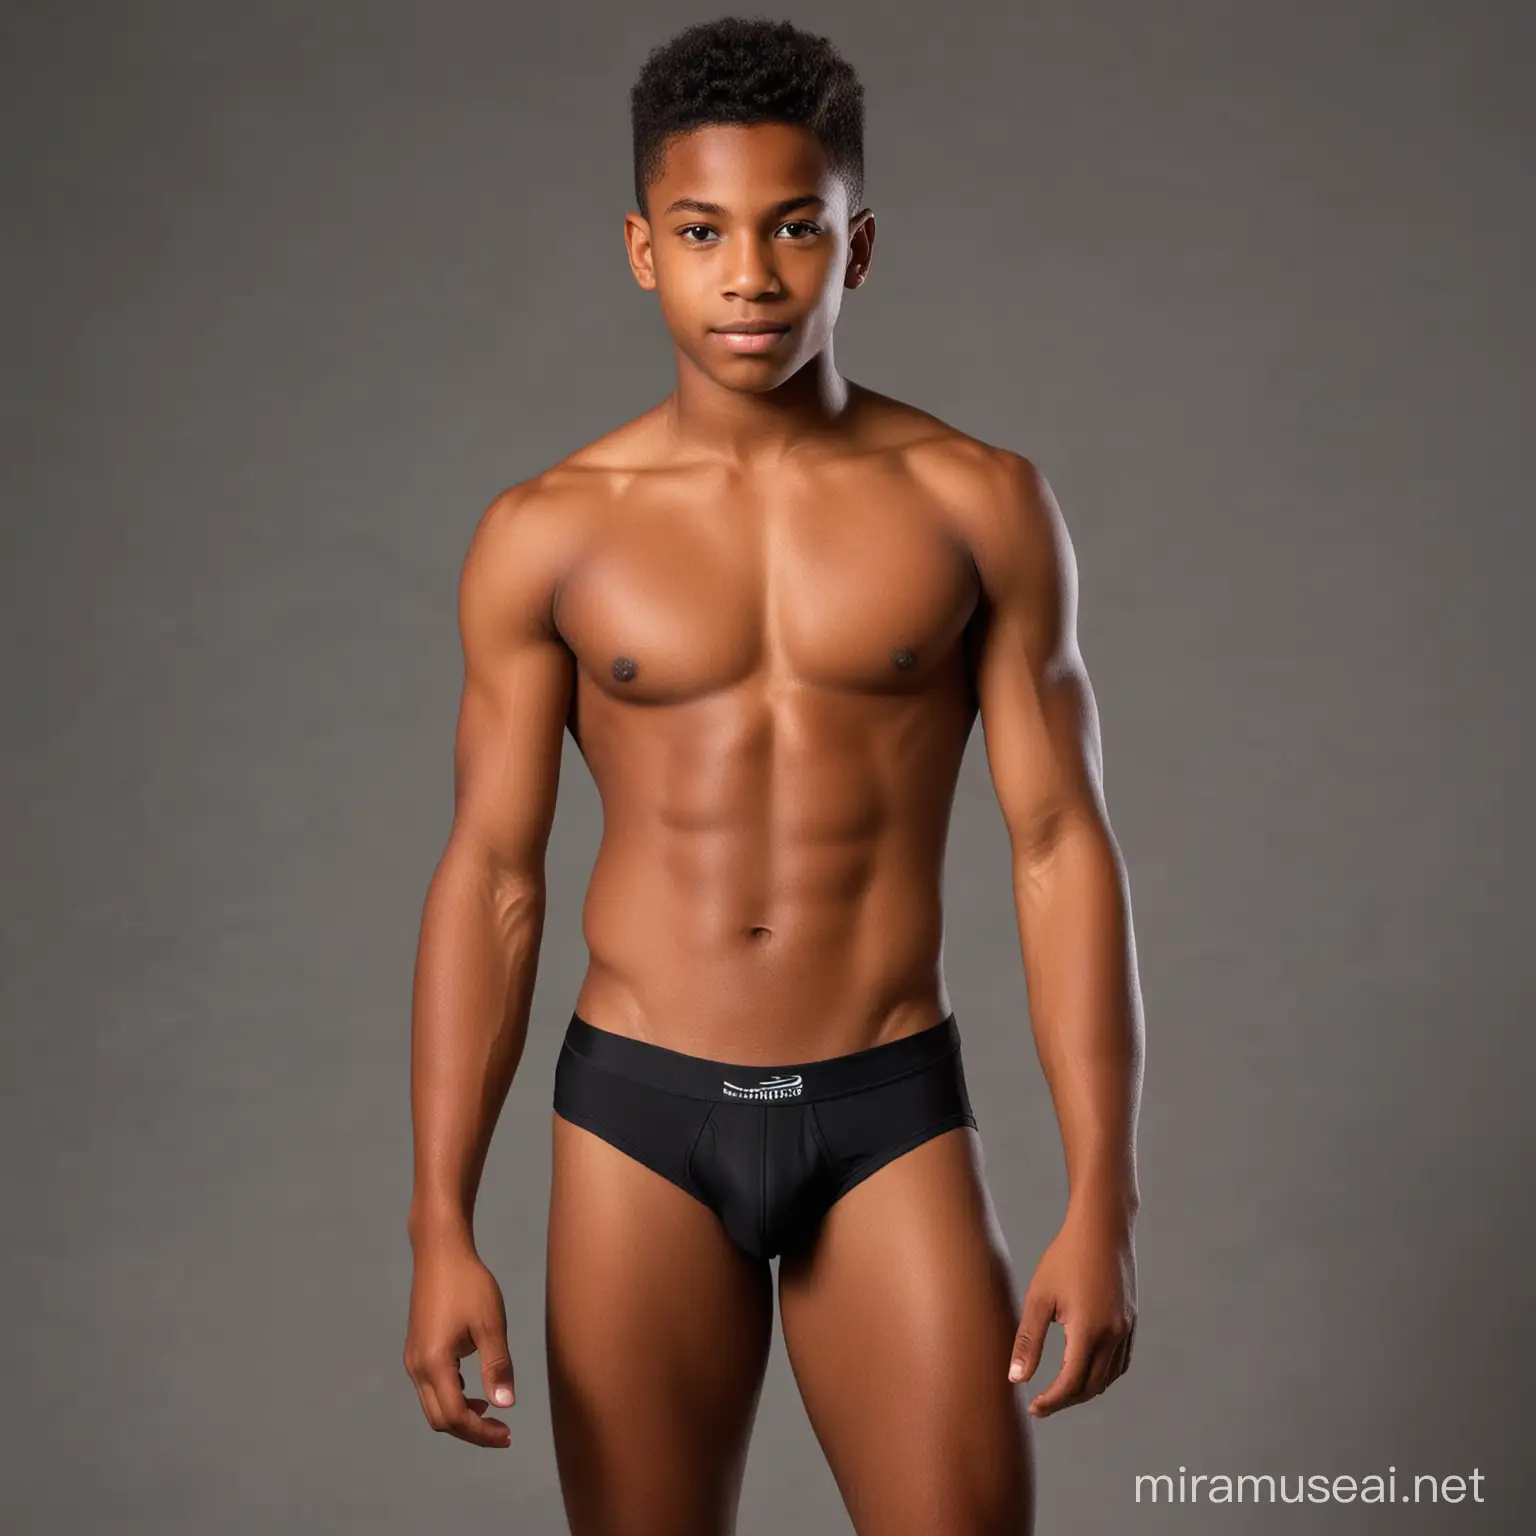 Muscular Black Teenage Boy Posing Shirtless in Underwear